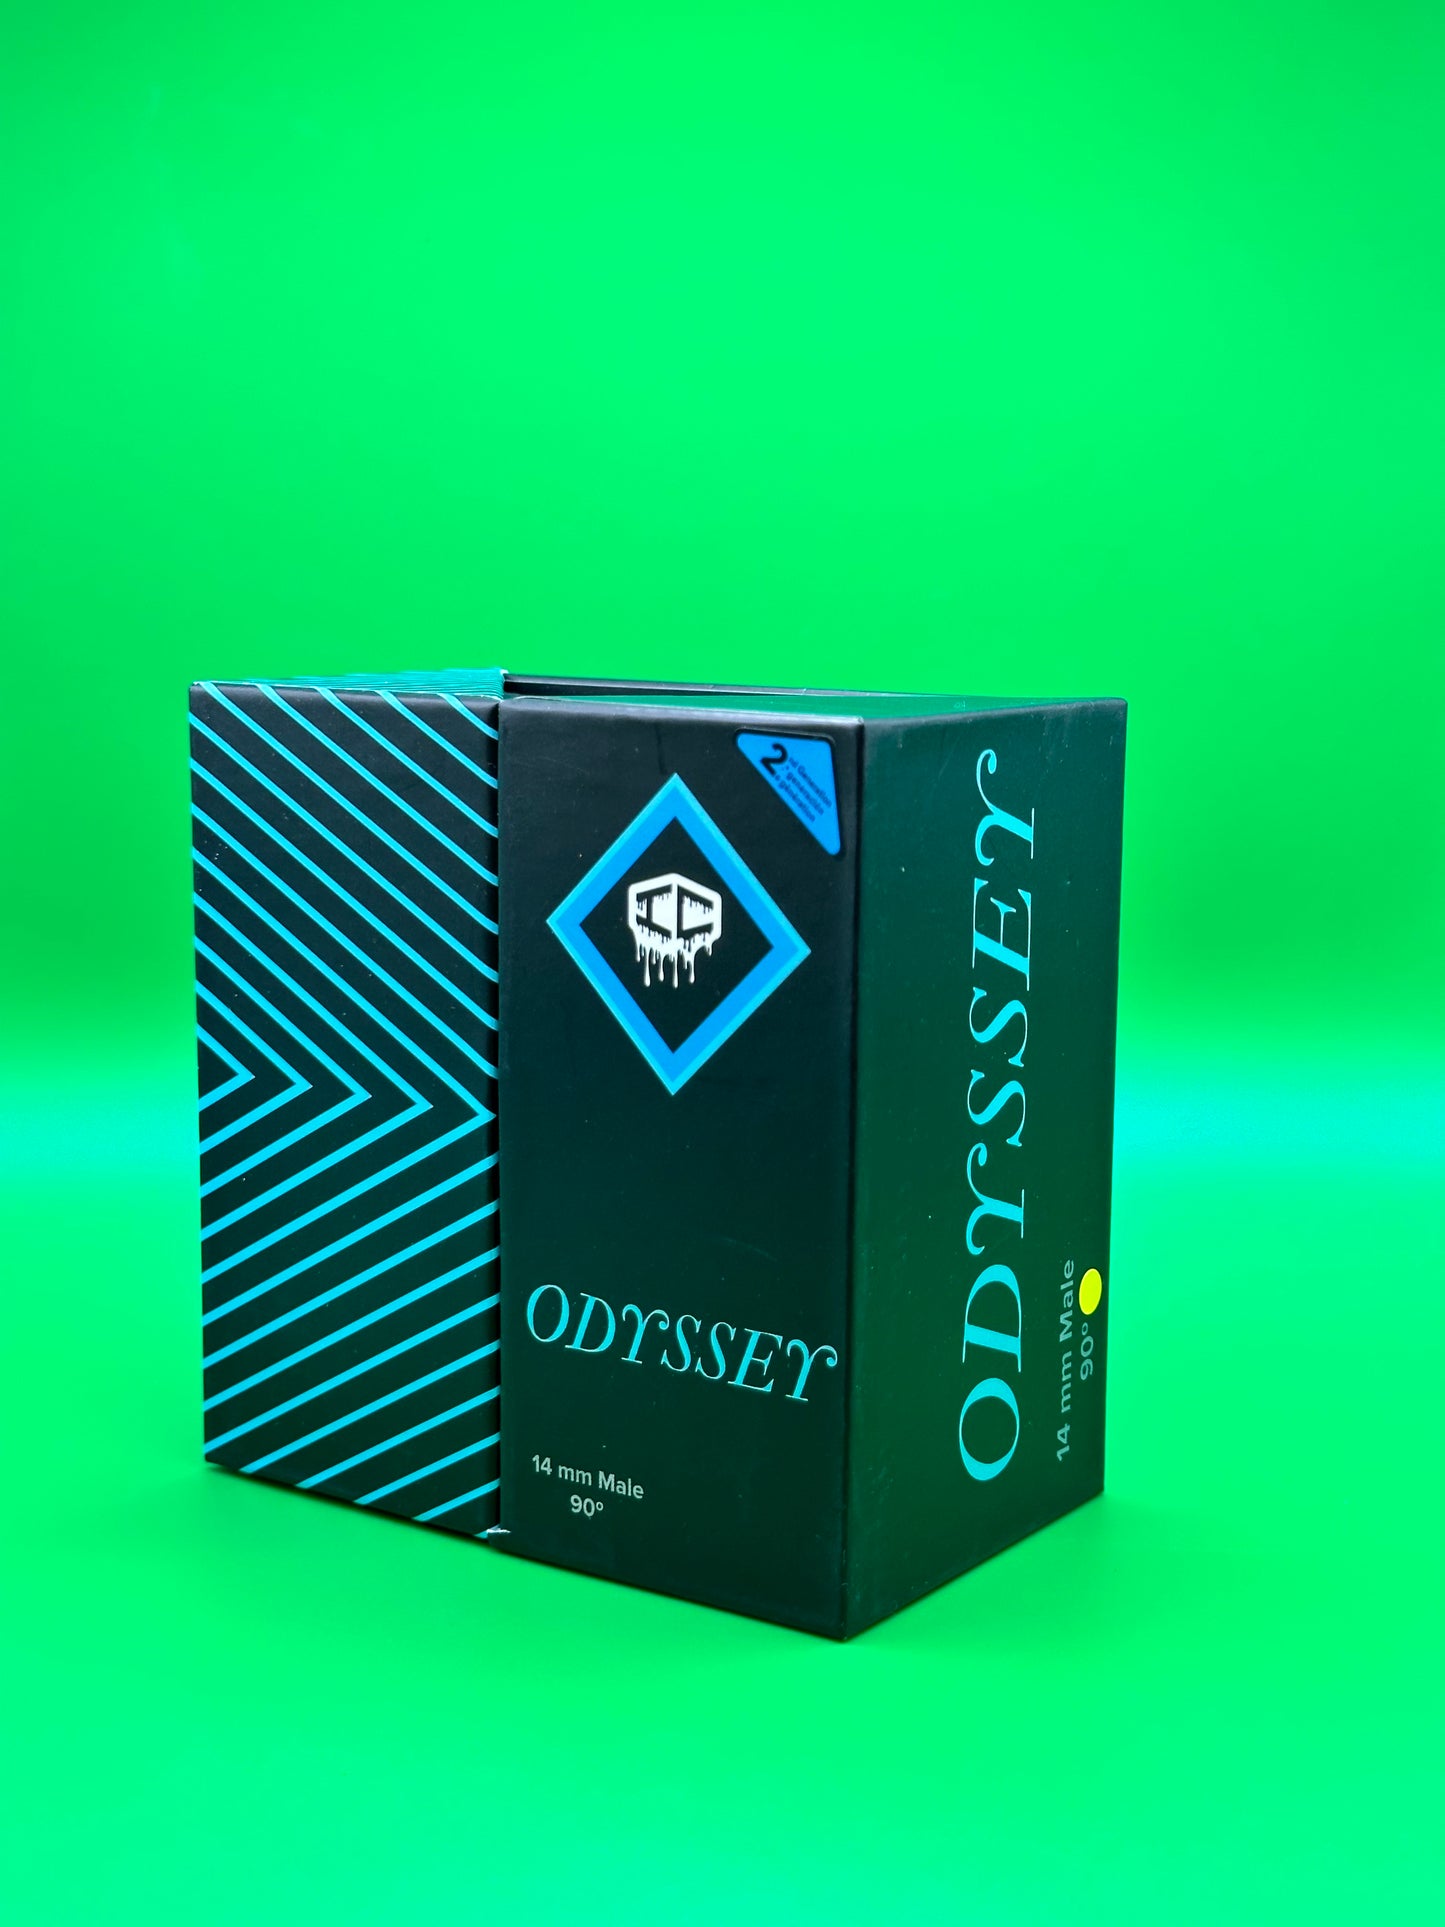 IC Quartz | Odyssey | 14mm Male 90°